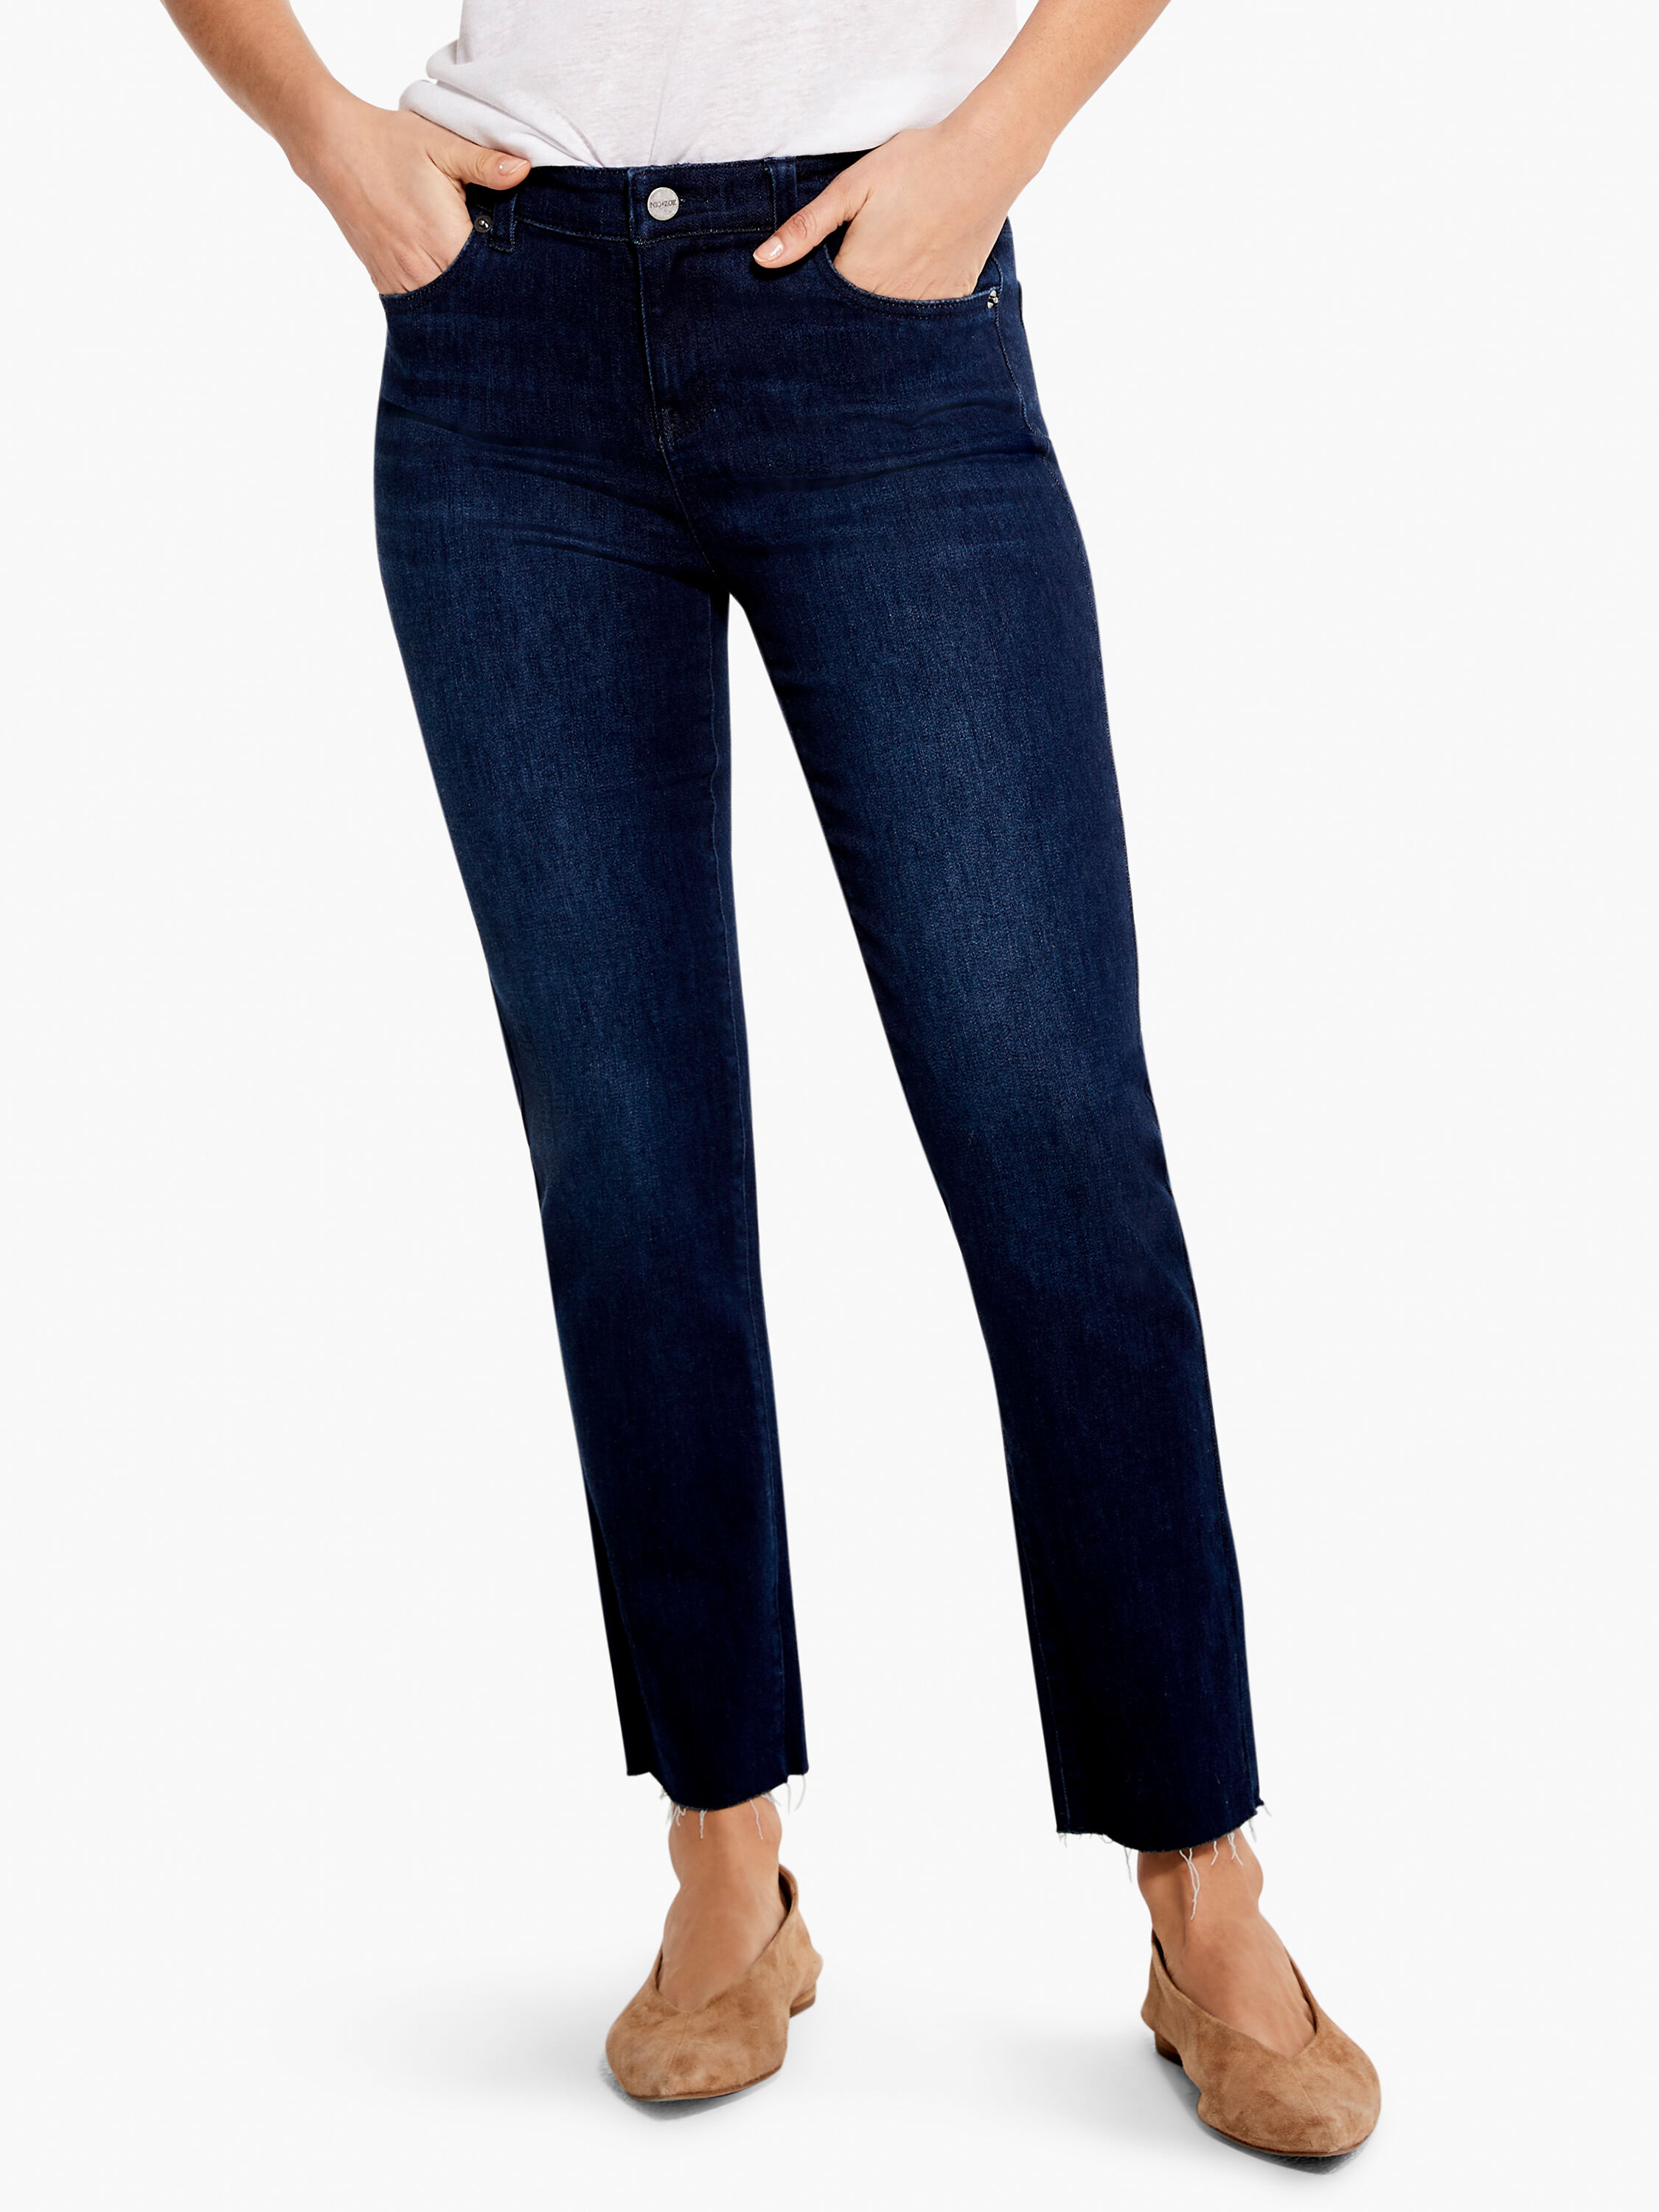 Jeans for Women | Women's Denim Pants, Skirt, Jackets | NIC+ZOE